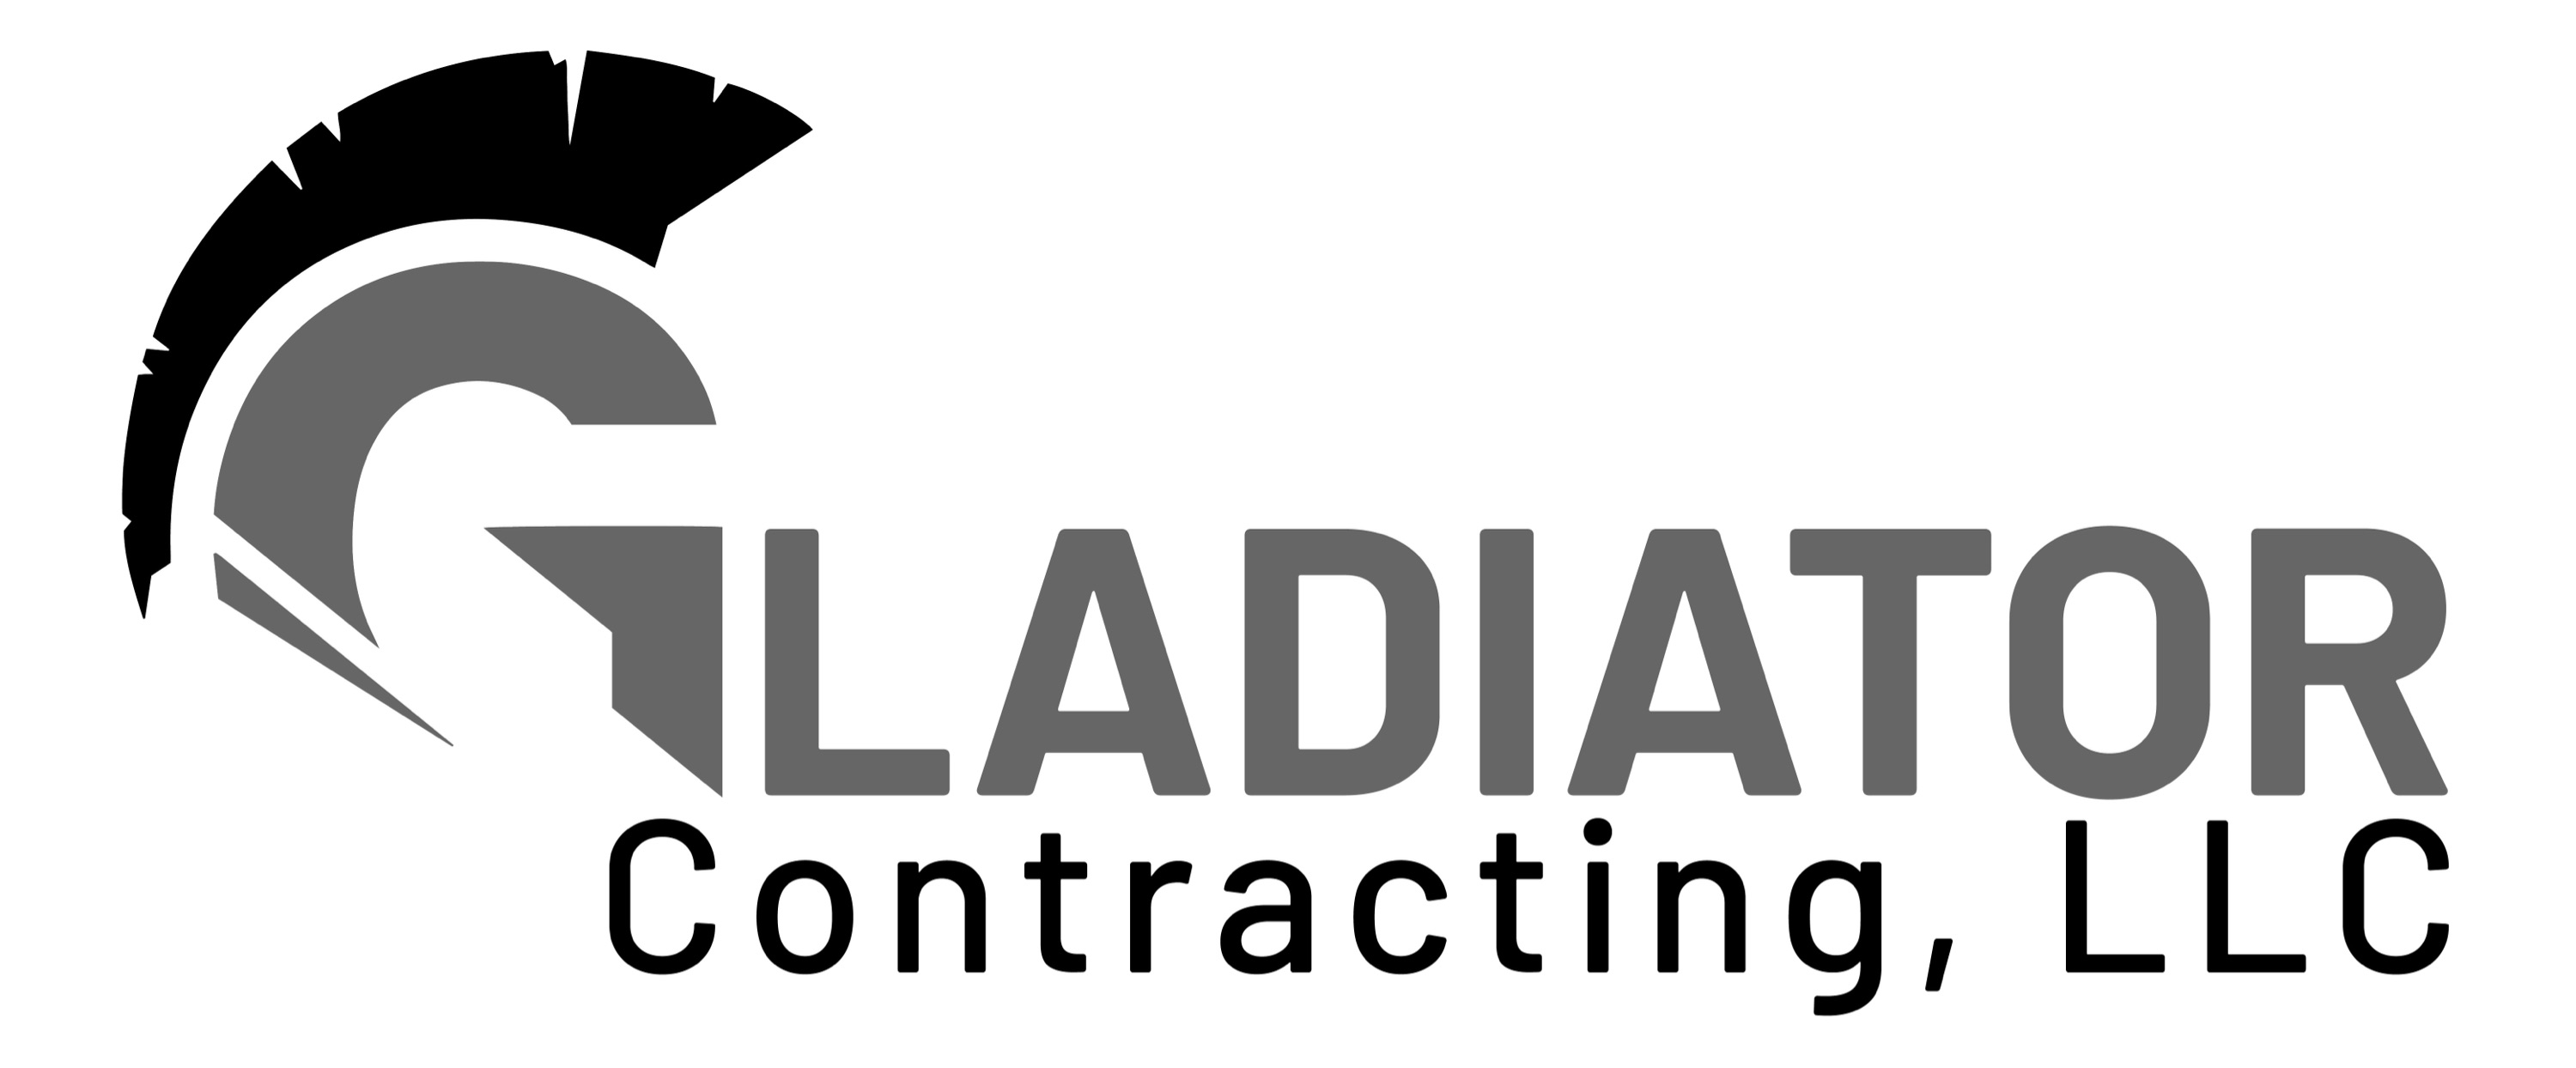 Gladiator Contracting, LLC Logo